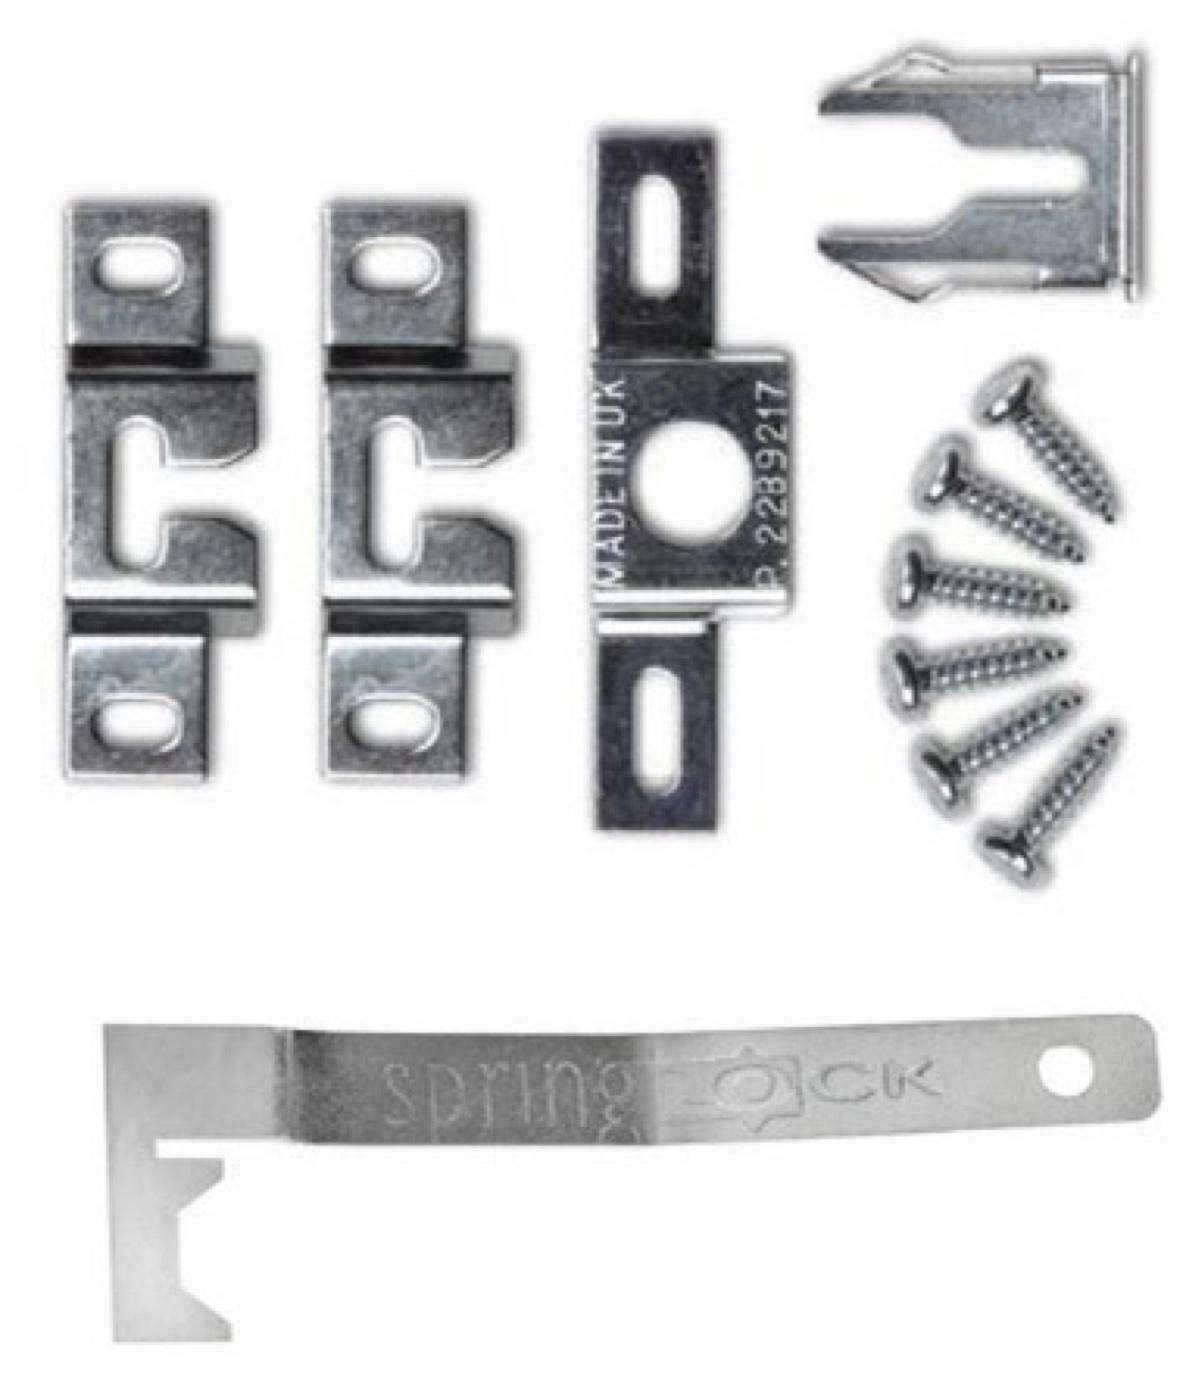 Copy of PH3943 SpringLock - Side by Side Method (Contains:s,2 x lock,2 x bridges, 4 x screws)